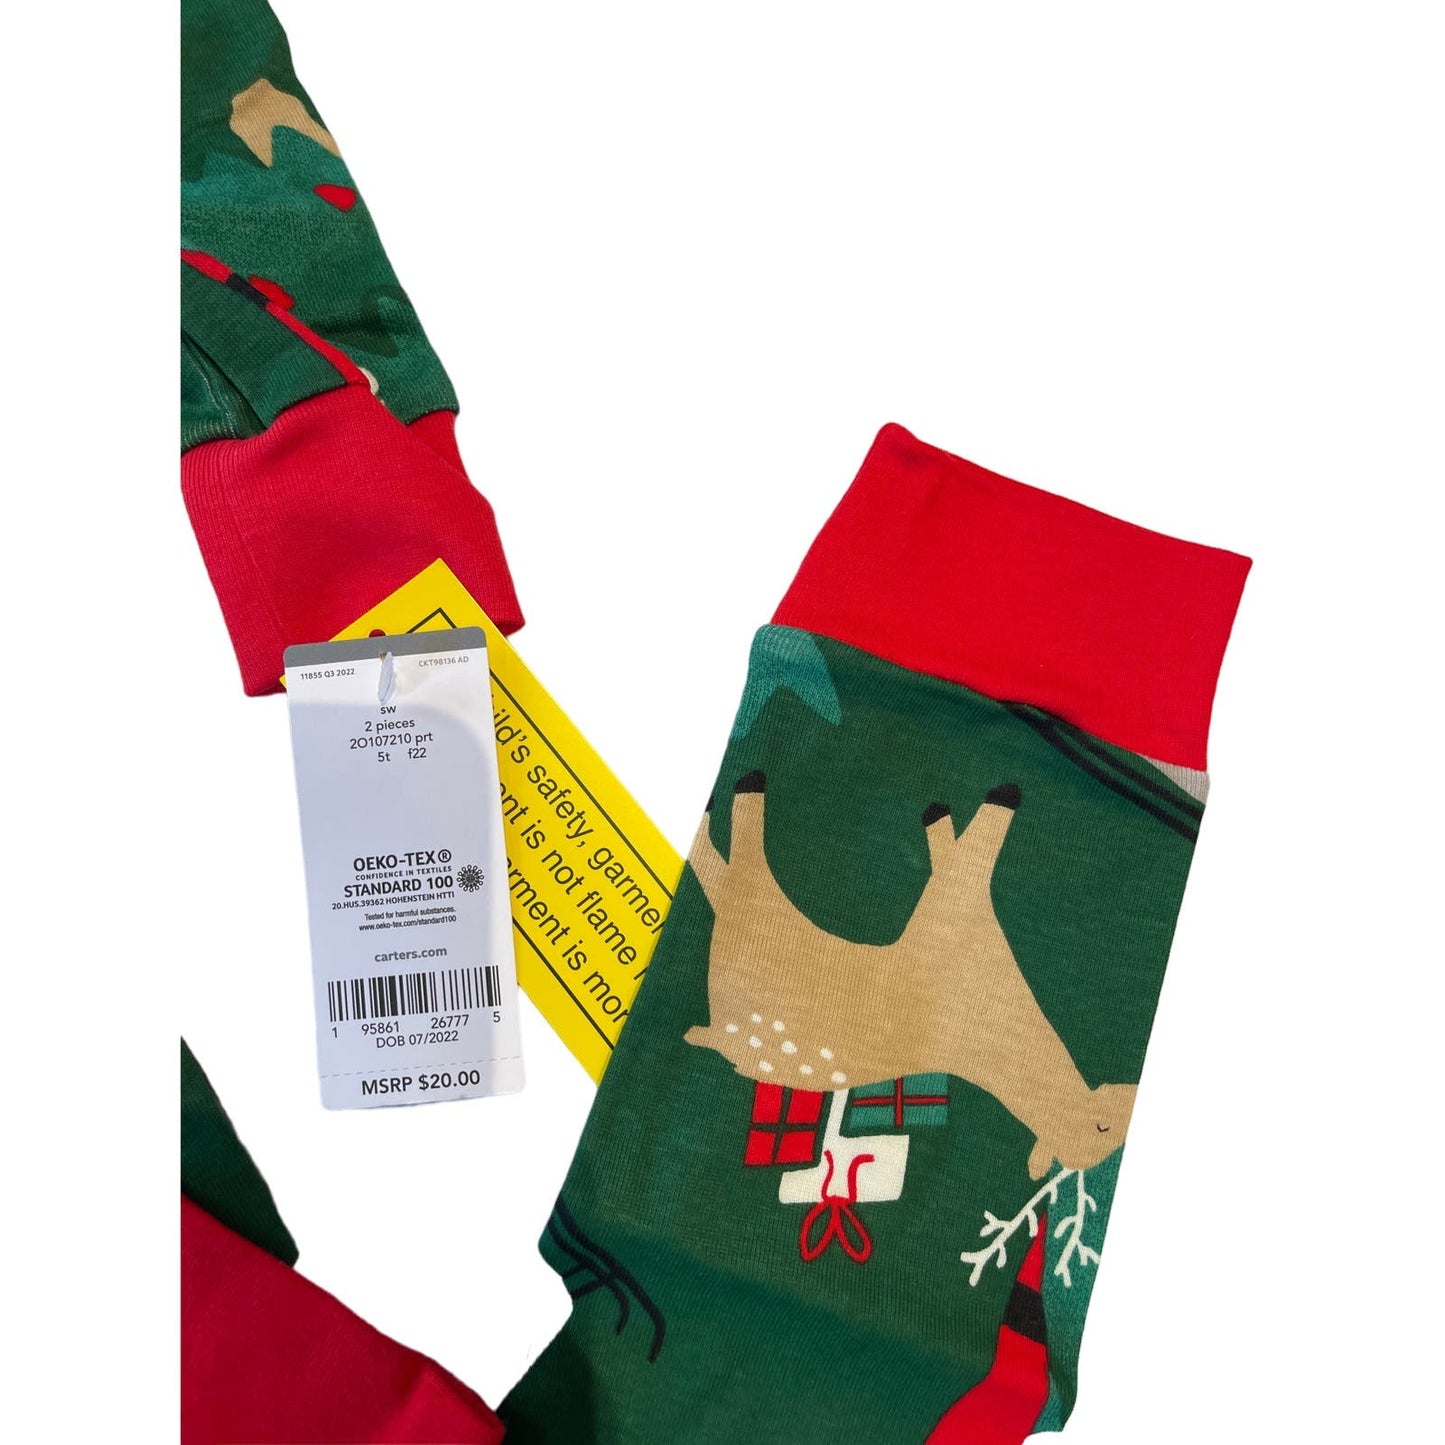 NWT Carter's Size 5T Fleece Holiday Christmas Pajama Set Santa Reindeer Green